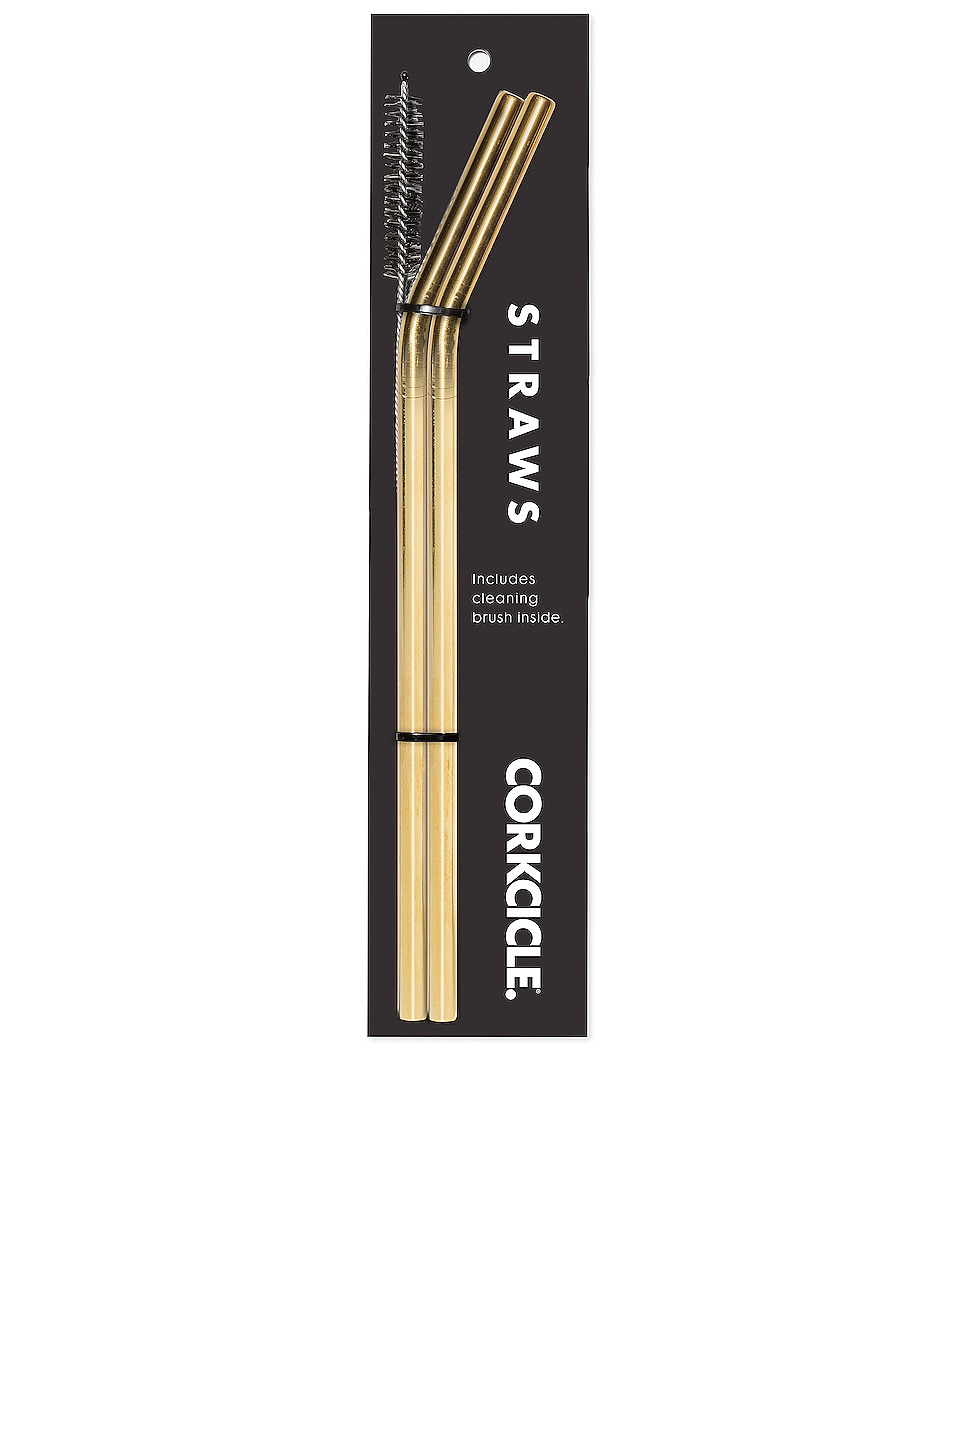 W&P Porter Metal Straws - Set of 4 Copper